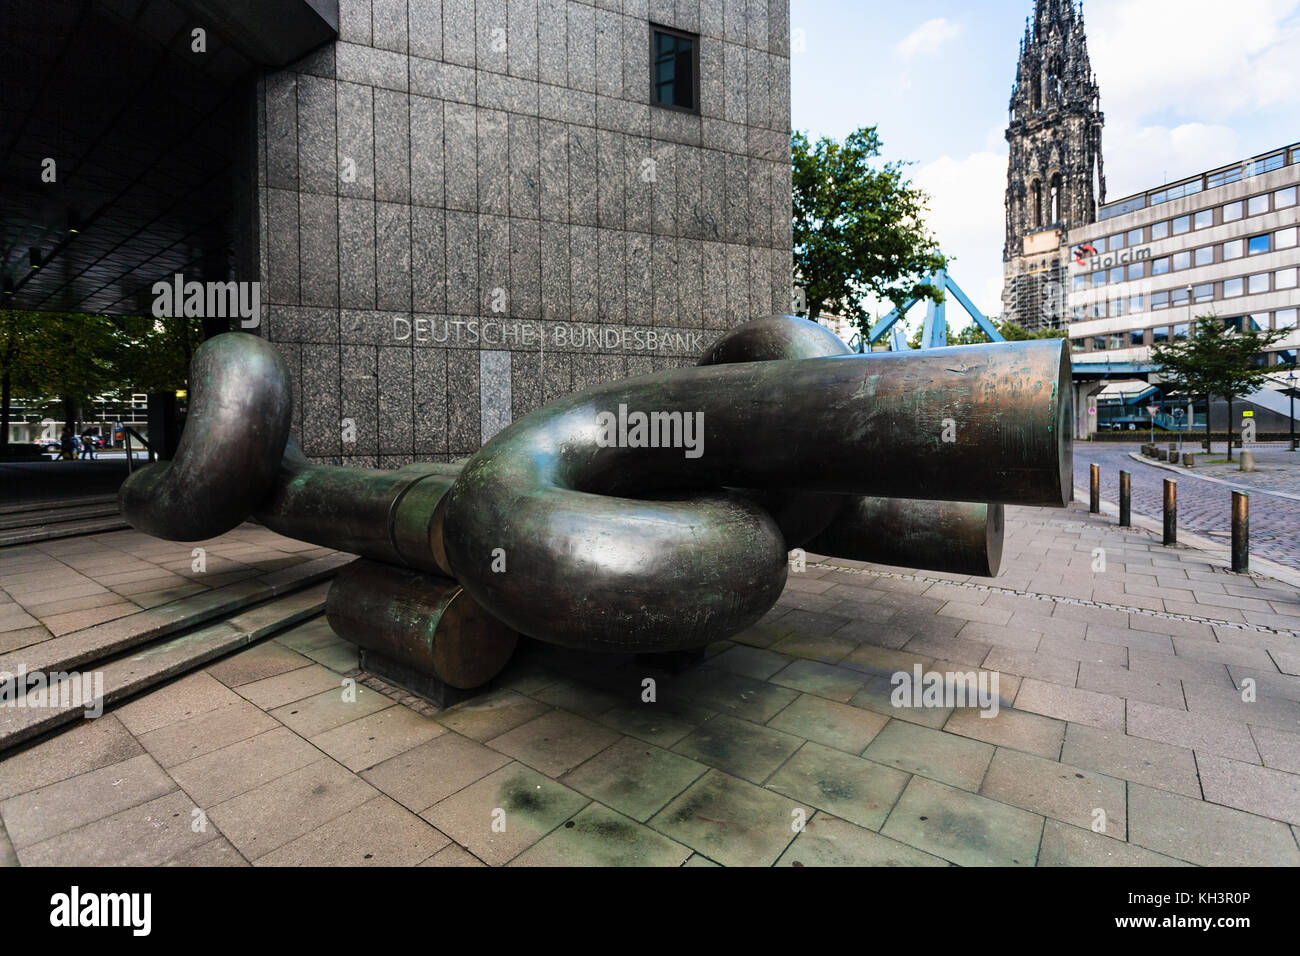 HAMBURG, GERMANY - SEPTEMBER 15, 2017: sculpture near office building of Deutsche Bundesbank in Hamburg city. Hamburg is the second largest city of Ge Stock Photo